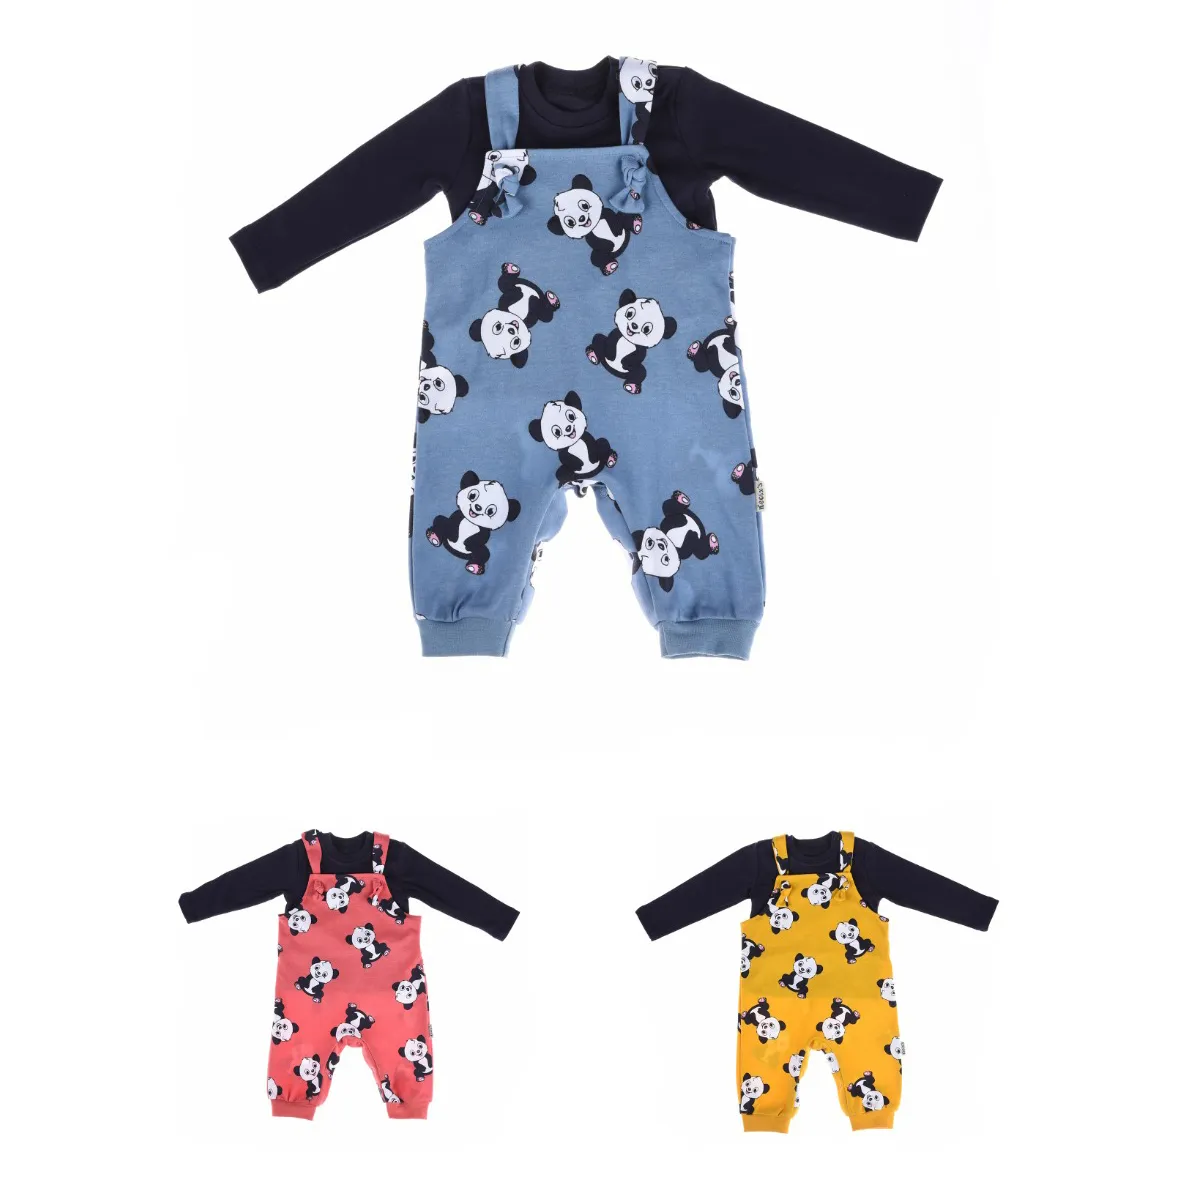 Hot Sale ! Panda Salopet 2 Pcs Baby Boys' Clothing Sets Boy Soft Cotton Baby Clothes By Necix's Brand